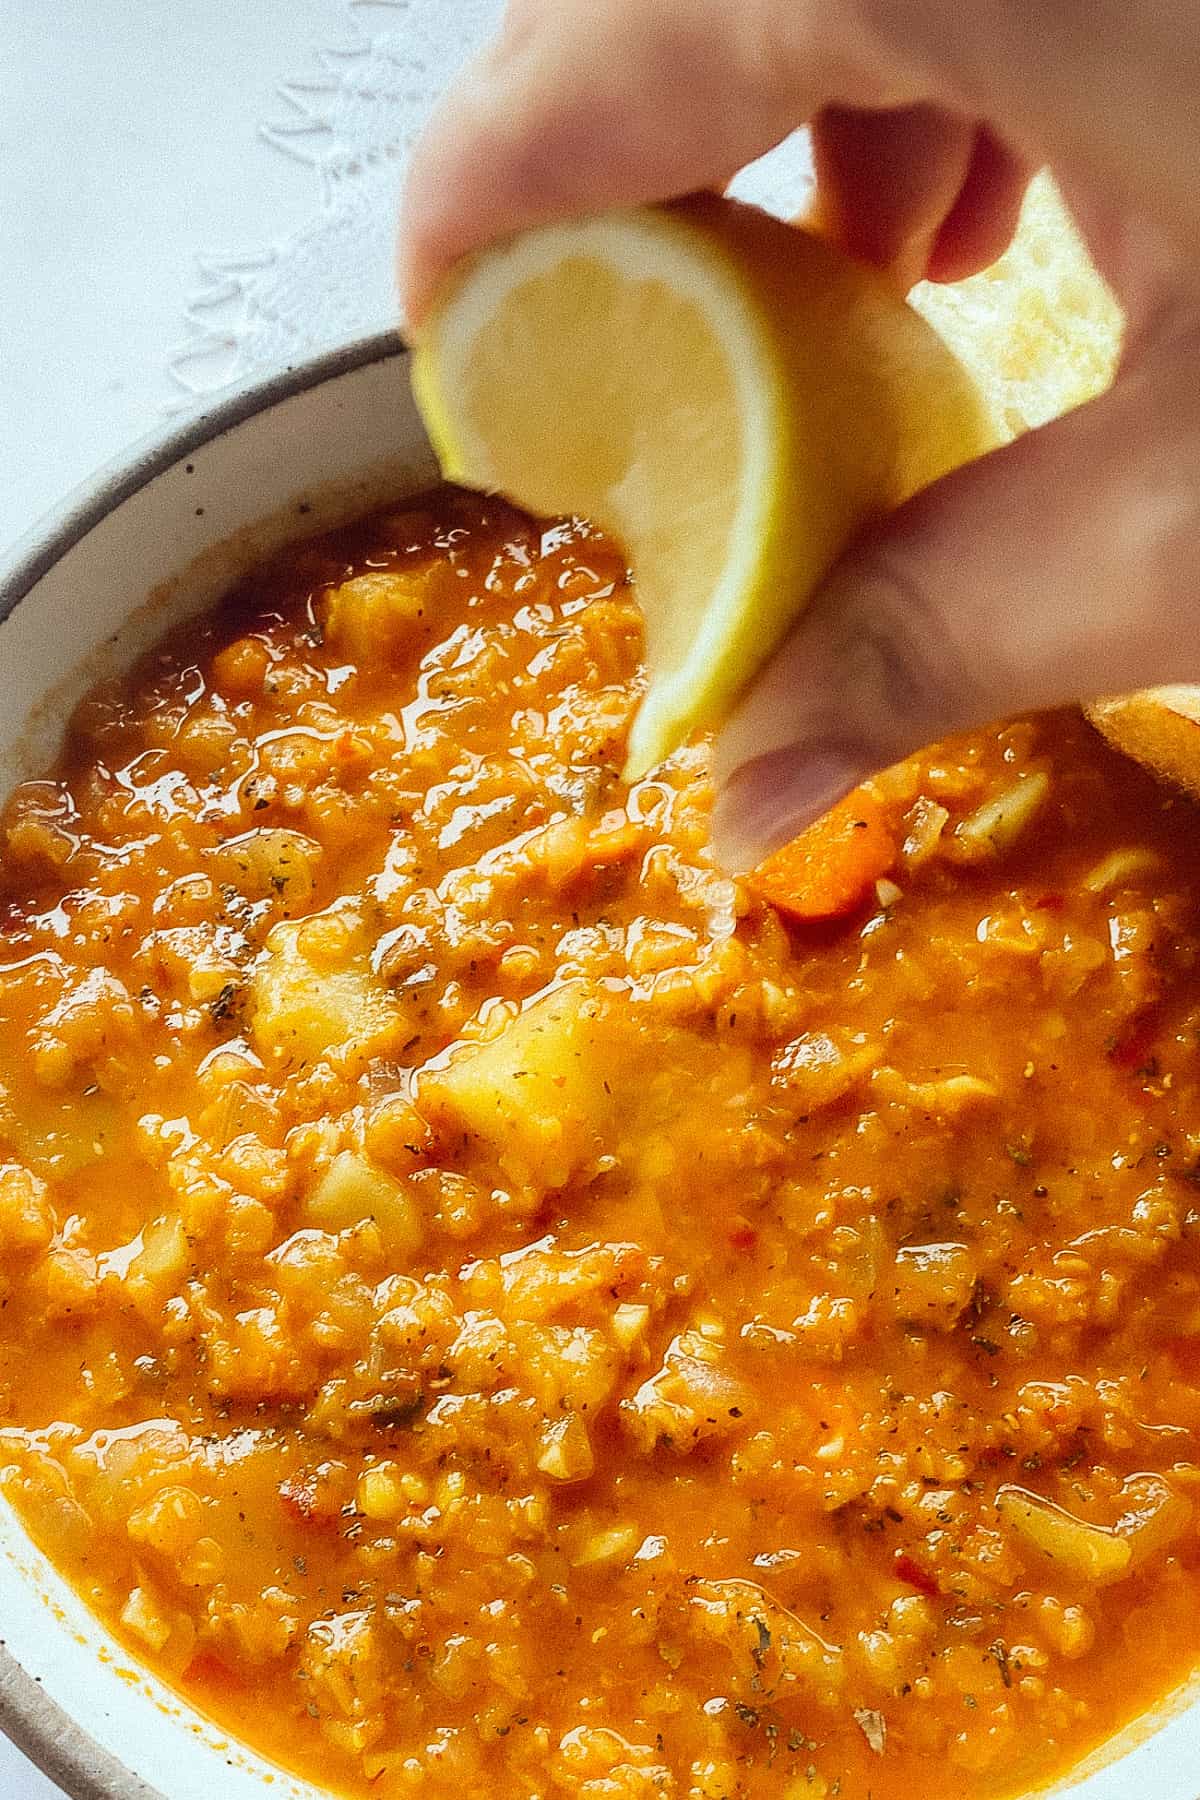 hand squeezing lemon onto red lentil soup